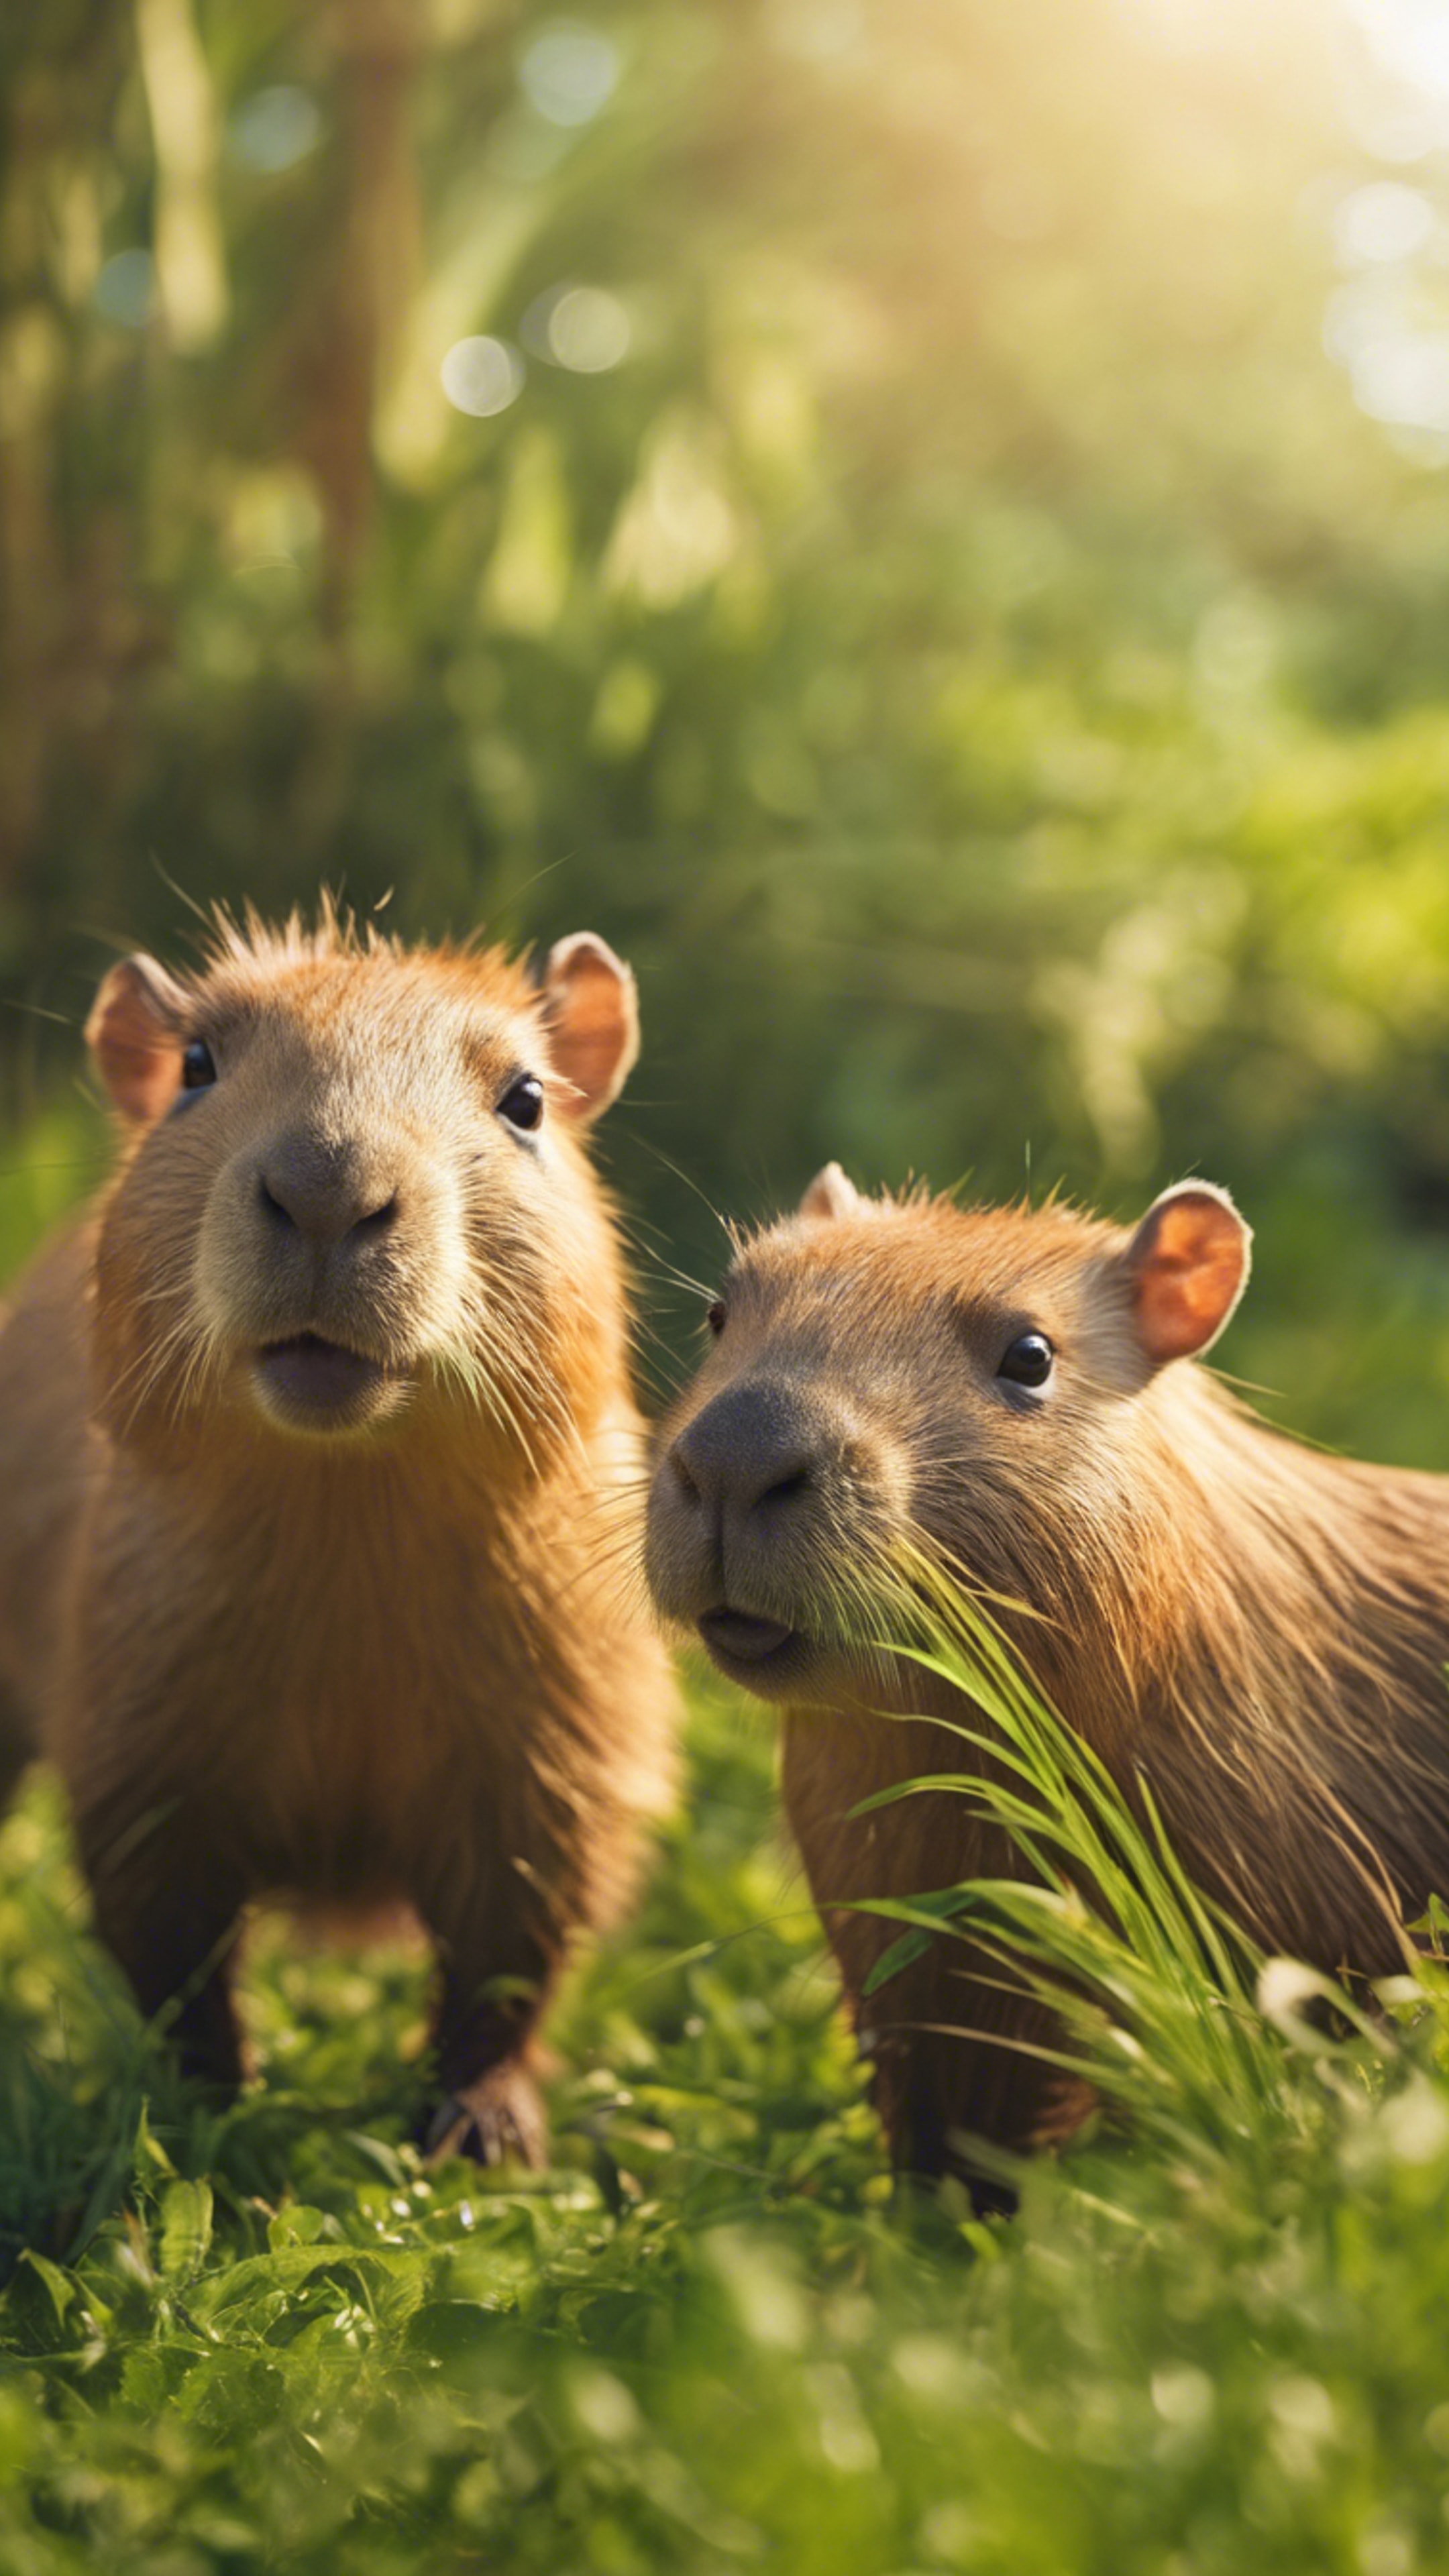 A group of playful capybara kids in a lush green meadow under the warm sunlight. Sfondo[941f99d4da544970bae4]